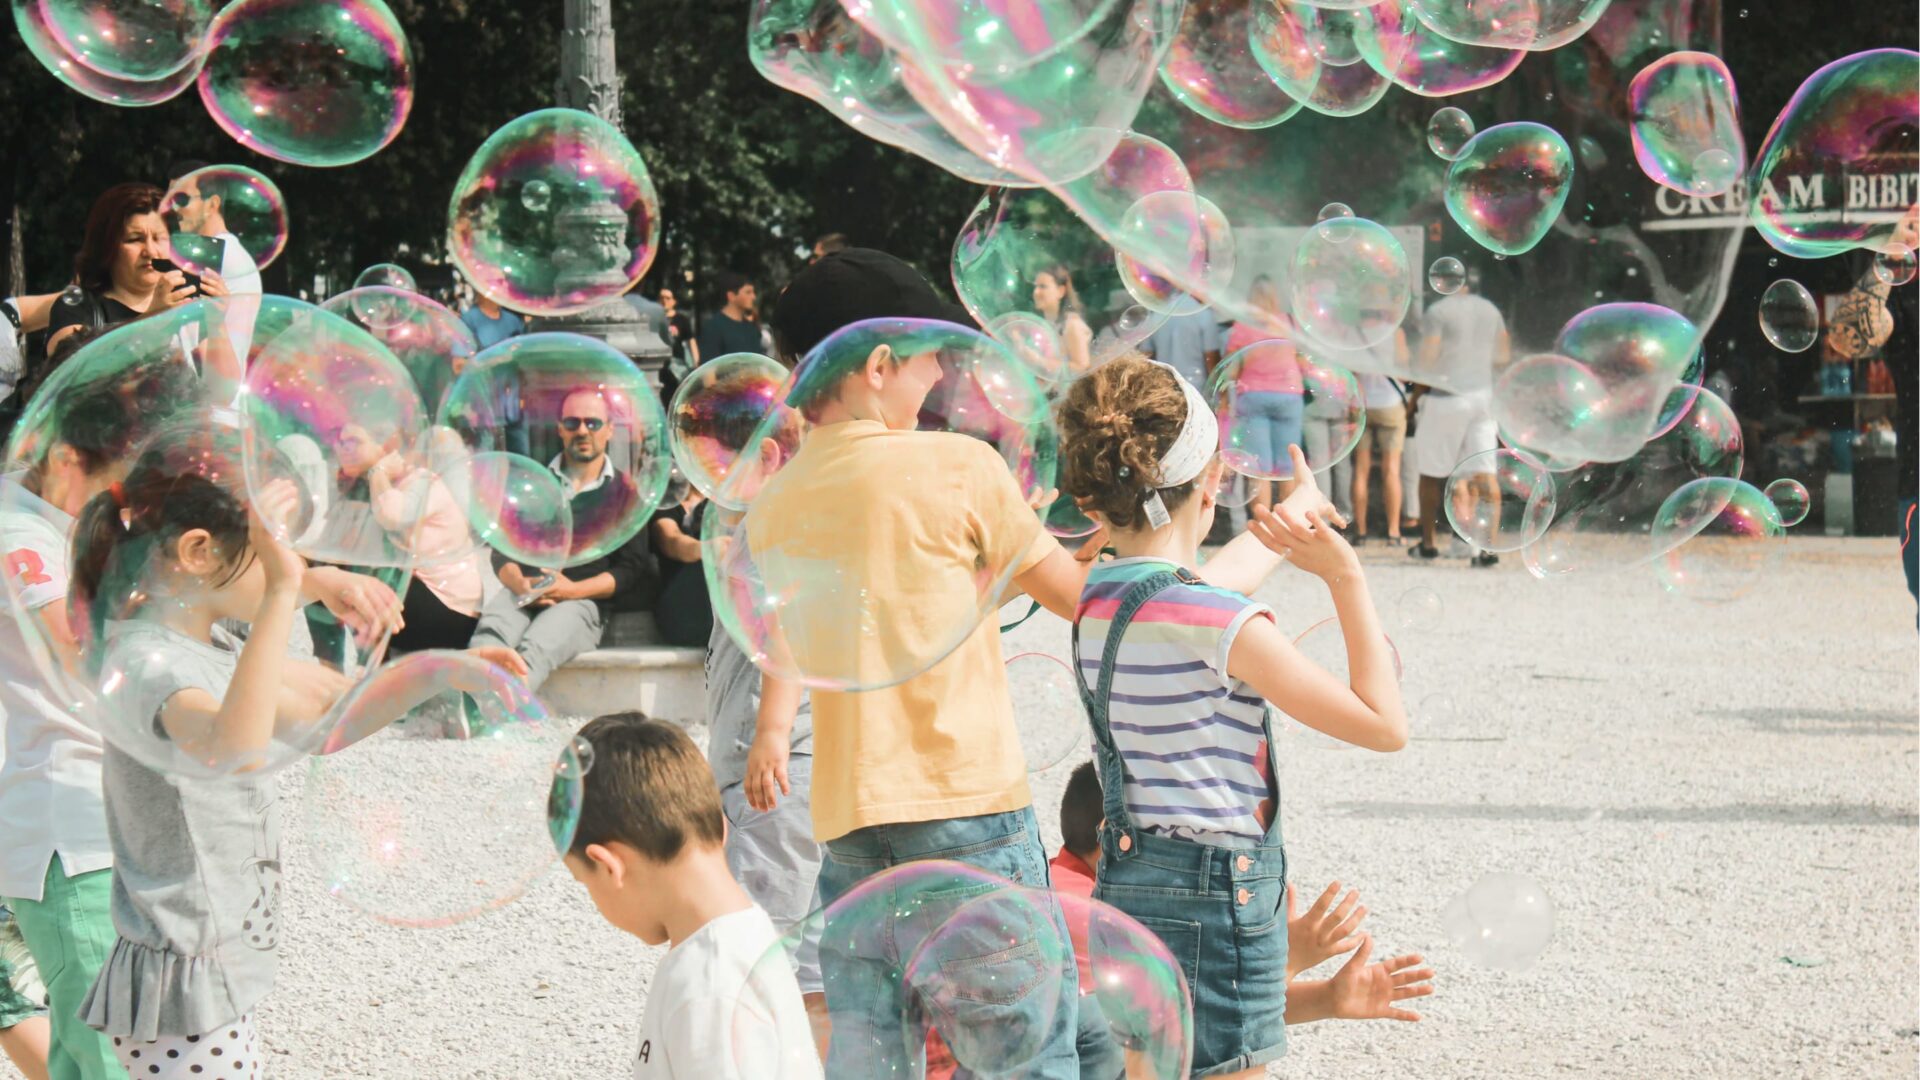 Bubbles and more colorful bubbles.